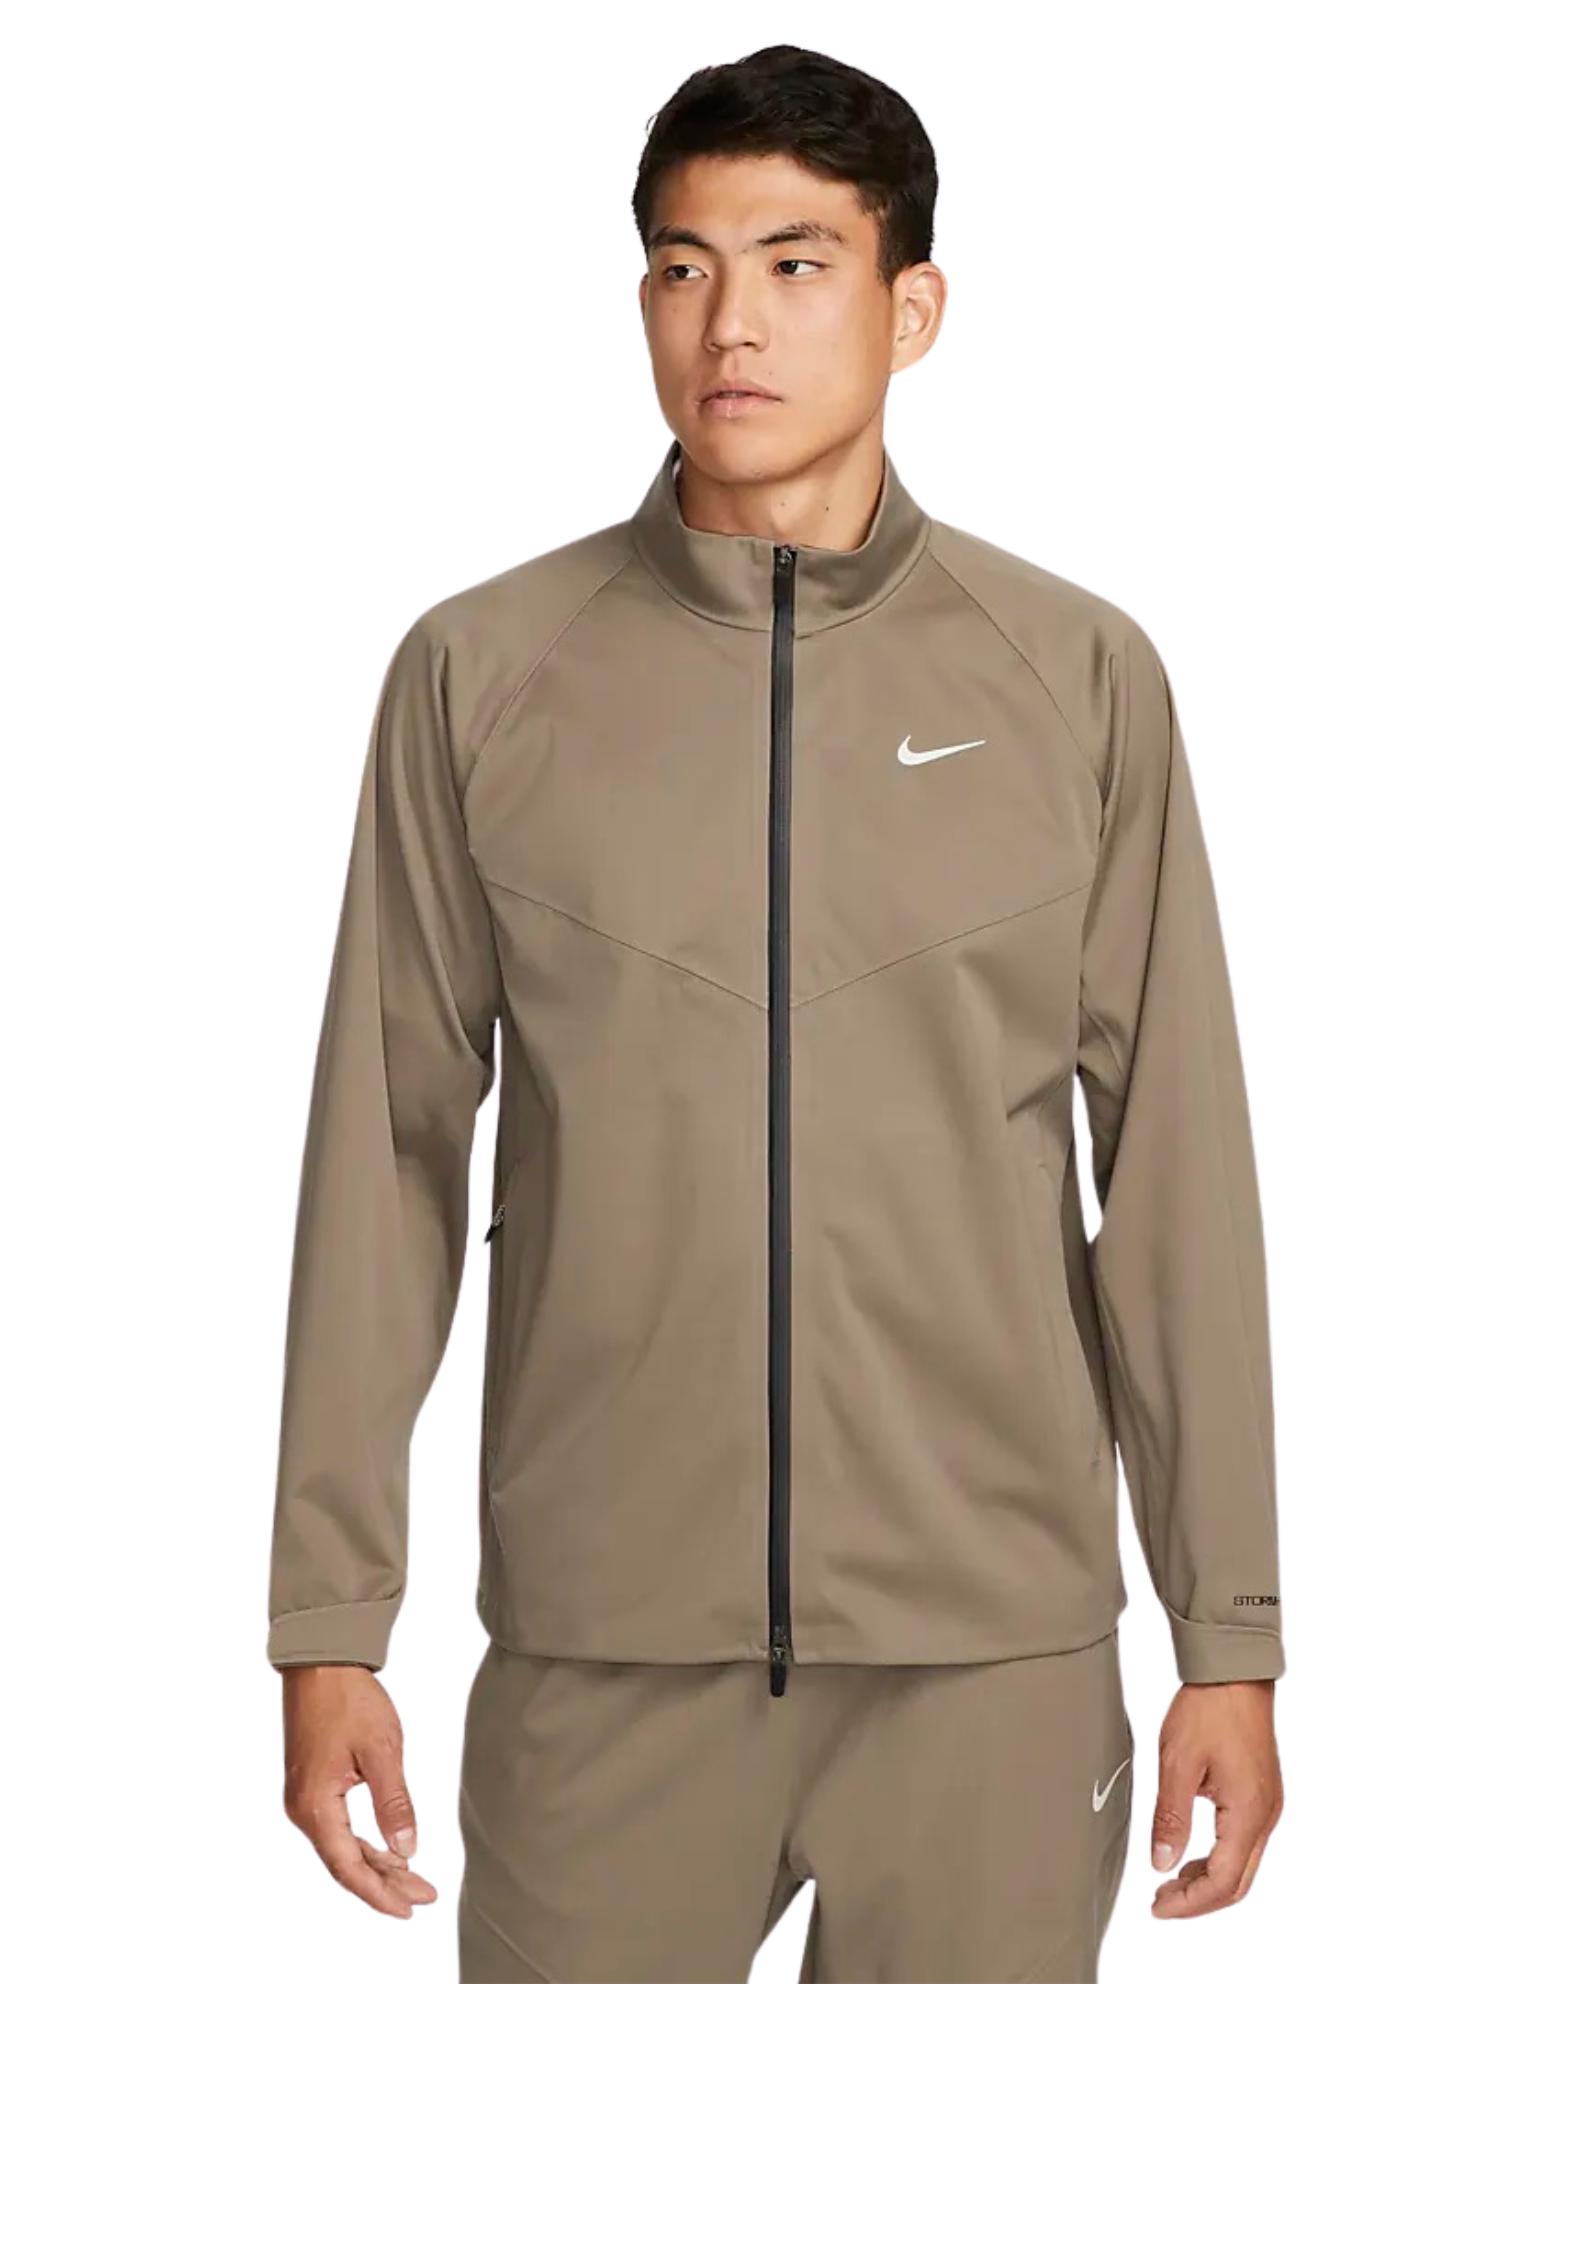 Nike | DN1955-040 |  Storm-FIT |  ADV Men's Full-Zip Golf Jacket | Olive Grey / Photon Dust